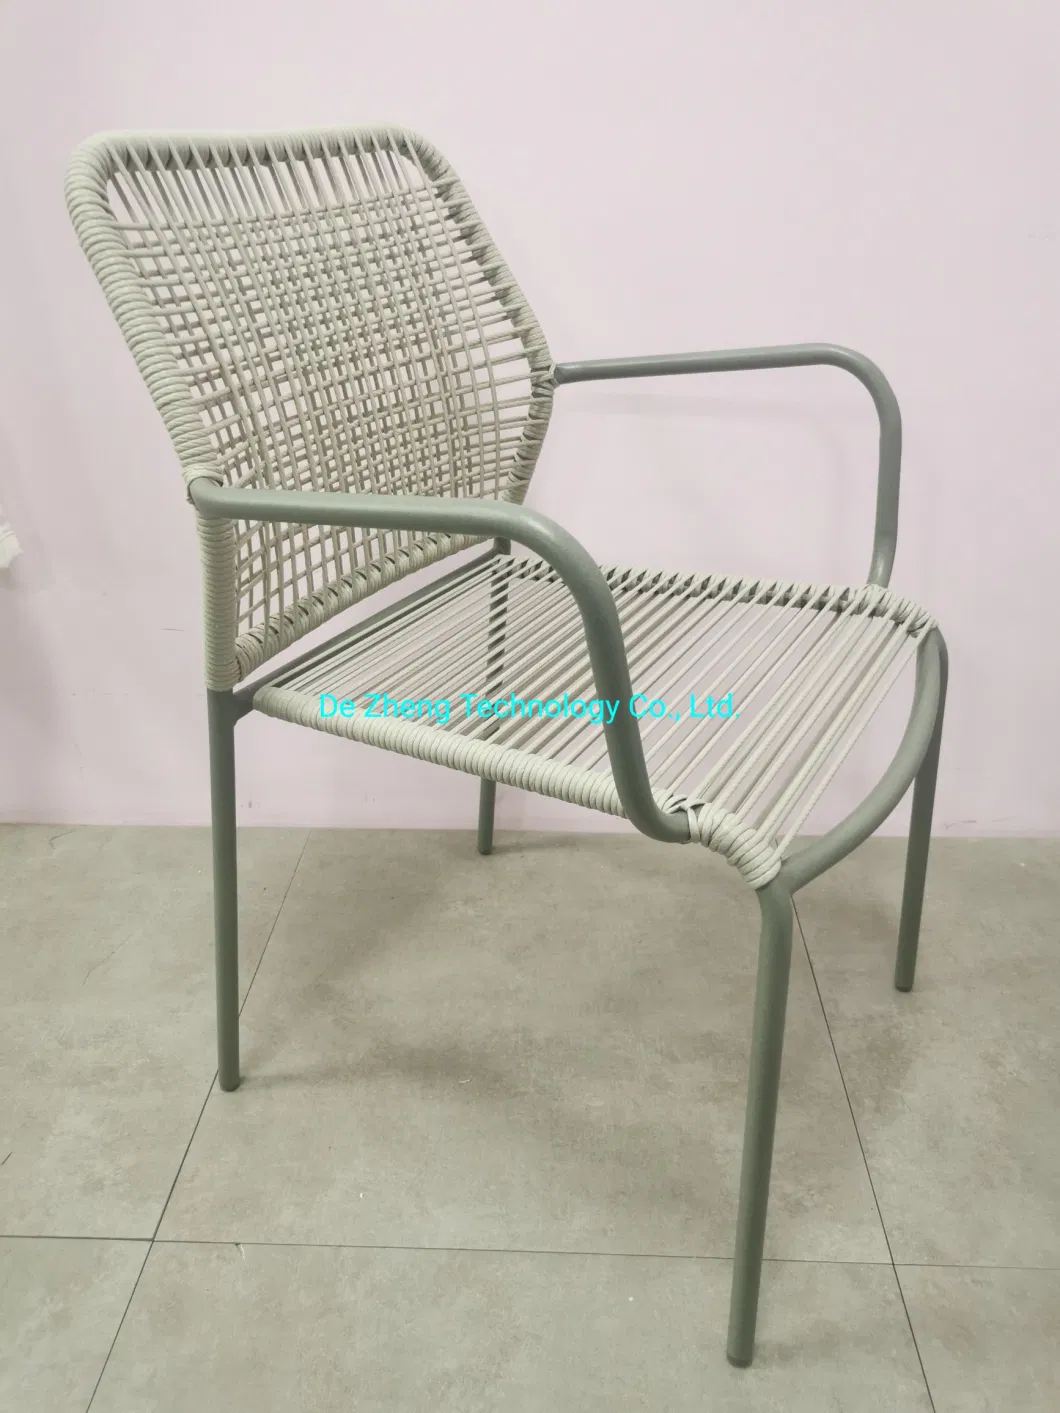 Modular Sectional Original Design Rope Aluminum Outdoor Patio Table and Chair Set Garden Furniture